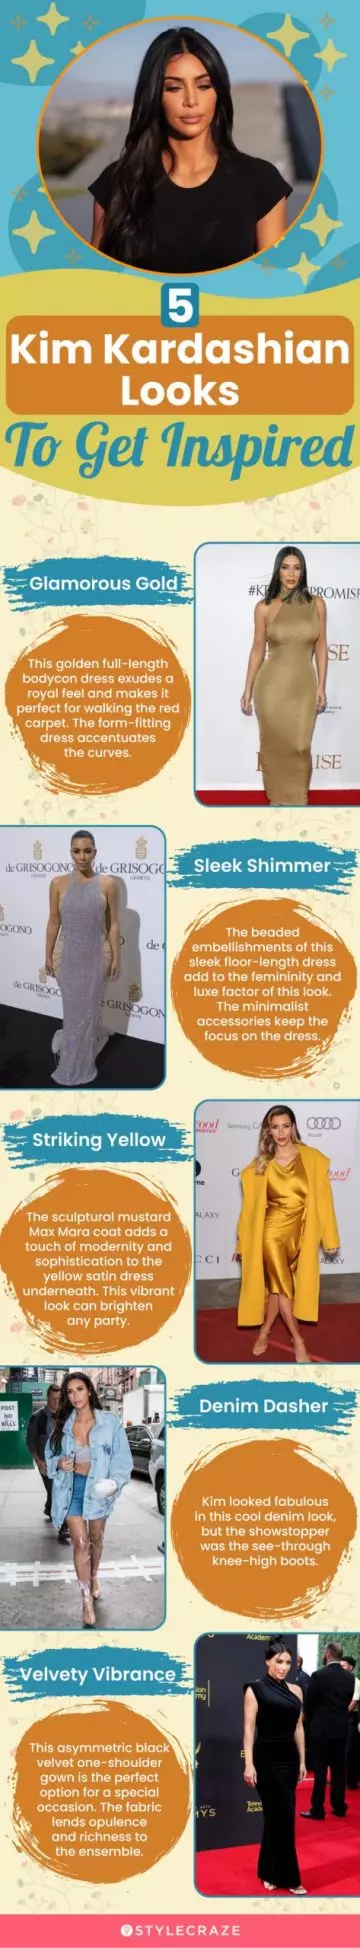 5 kim kardashian looks to get inspired (infographic)